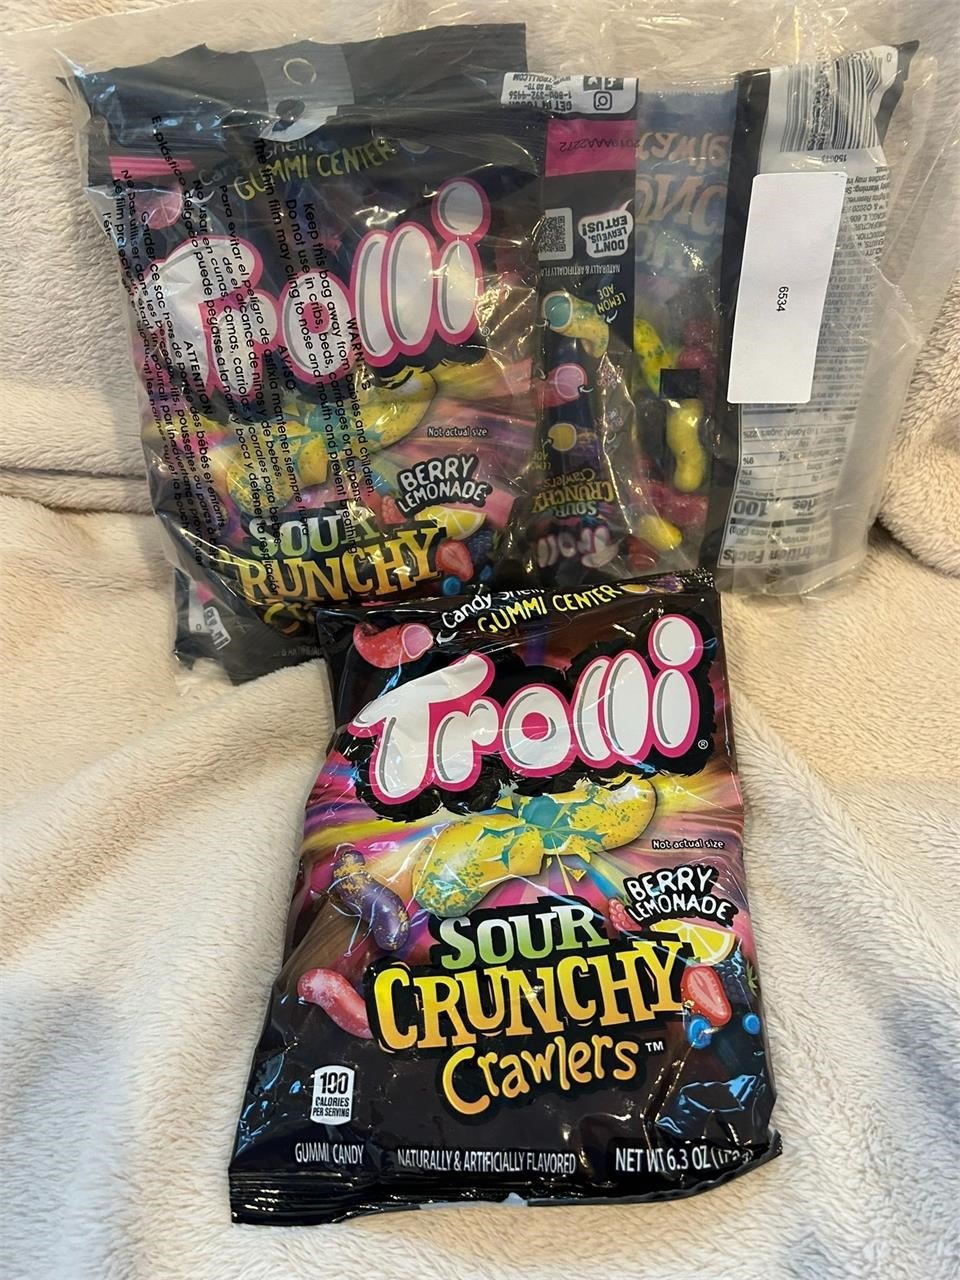 4 bags of Trolli sour crunchy crawlers